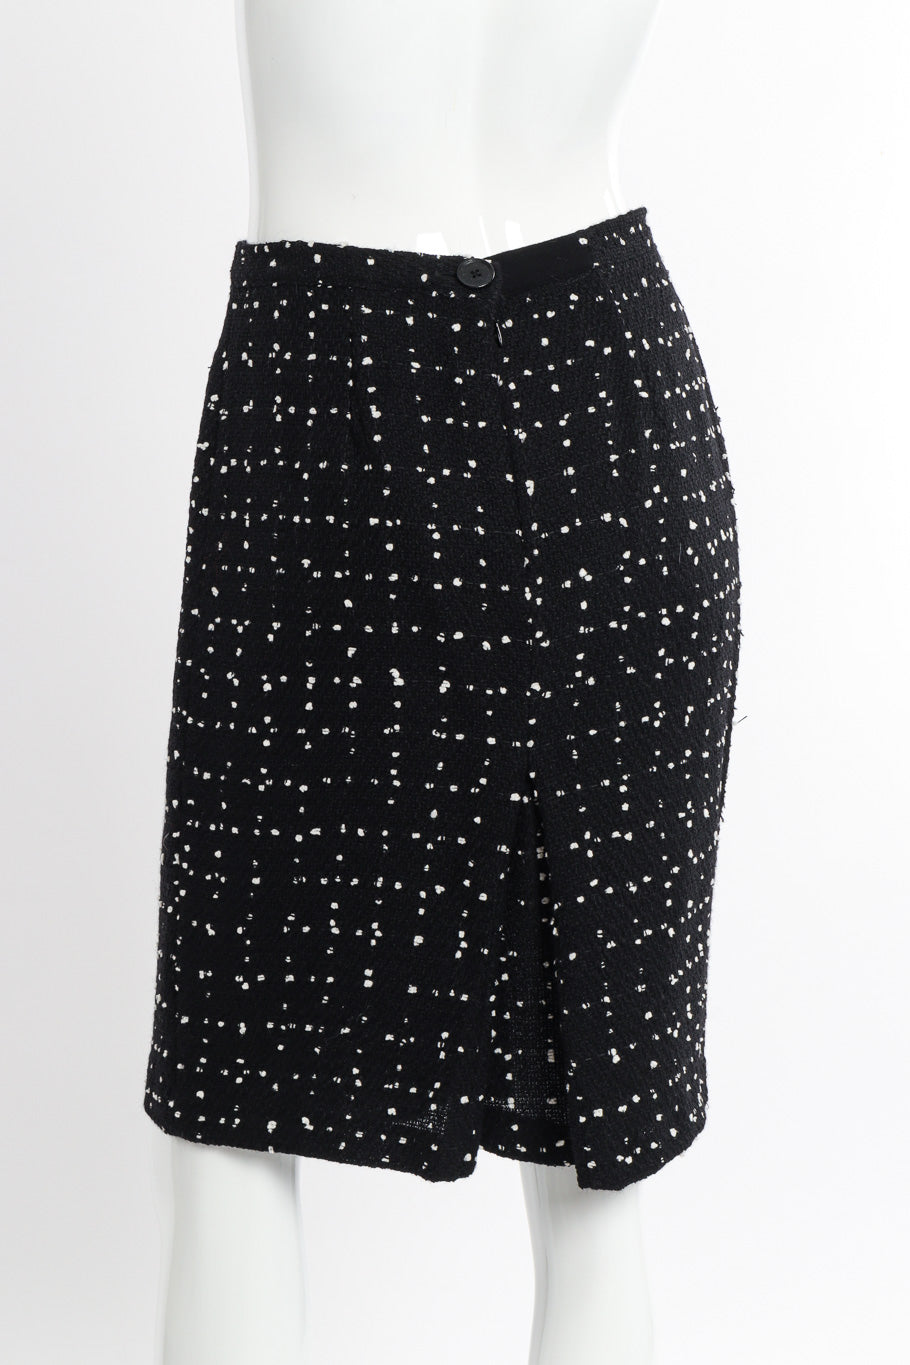 Vintage Moschino Dot Bouclé Jacket and Skirt Set skirt back view closeup @recessla